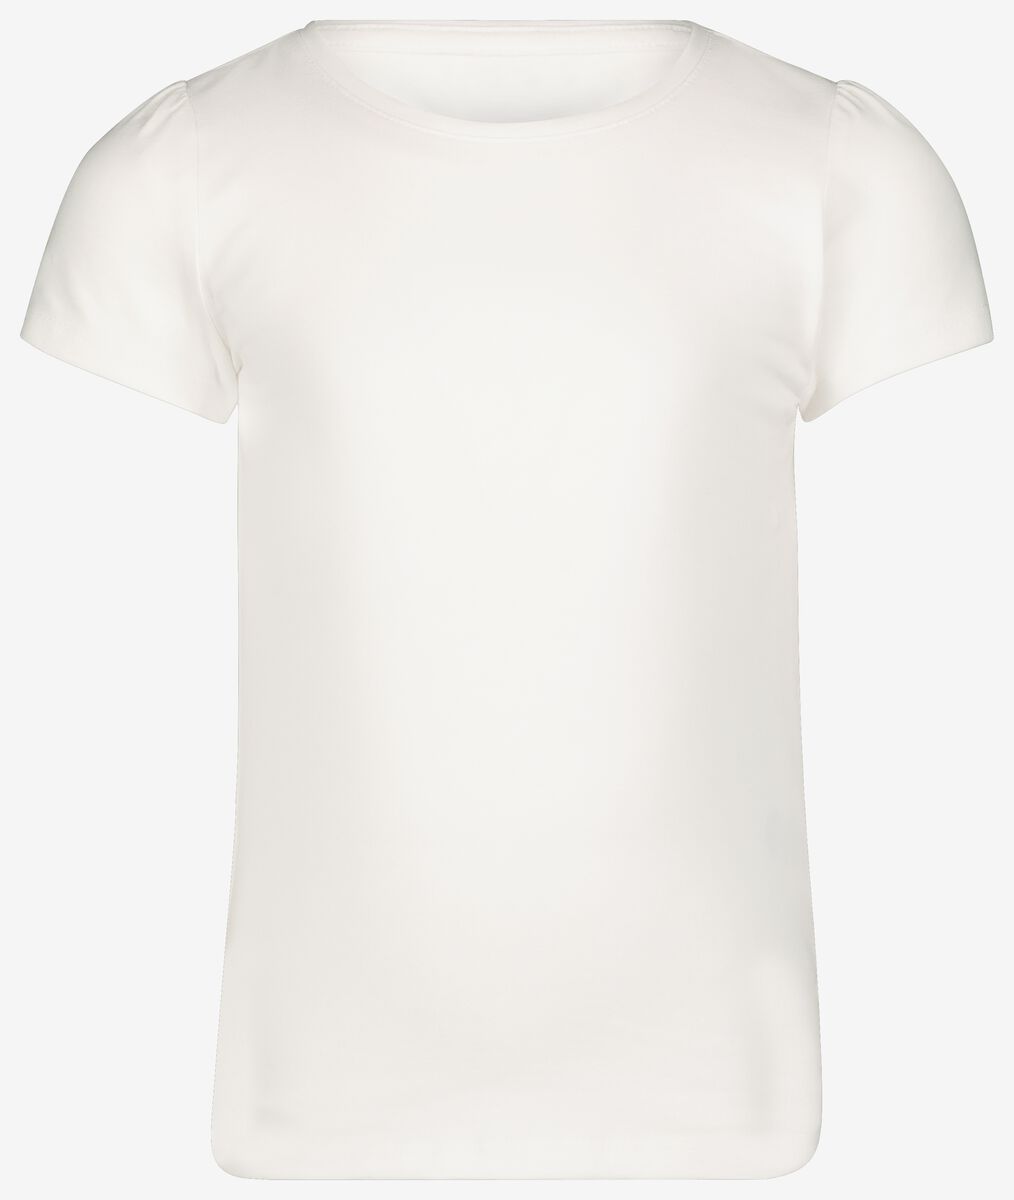 kinder t-shirts - 2 stuks wit 122/128 - 30843933 - HEMA